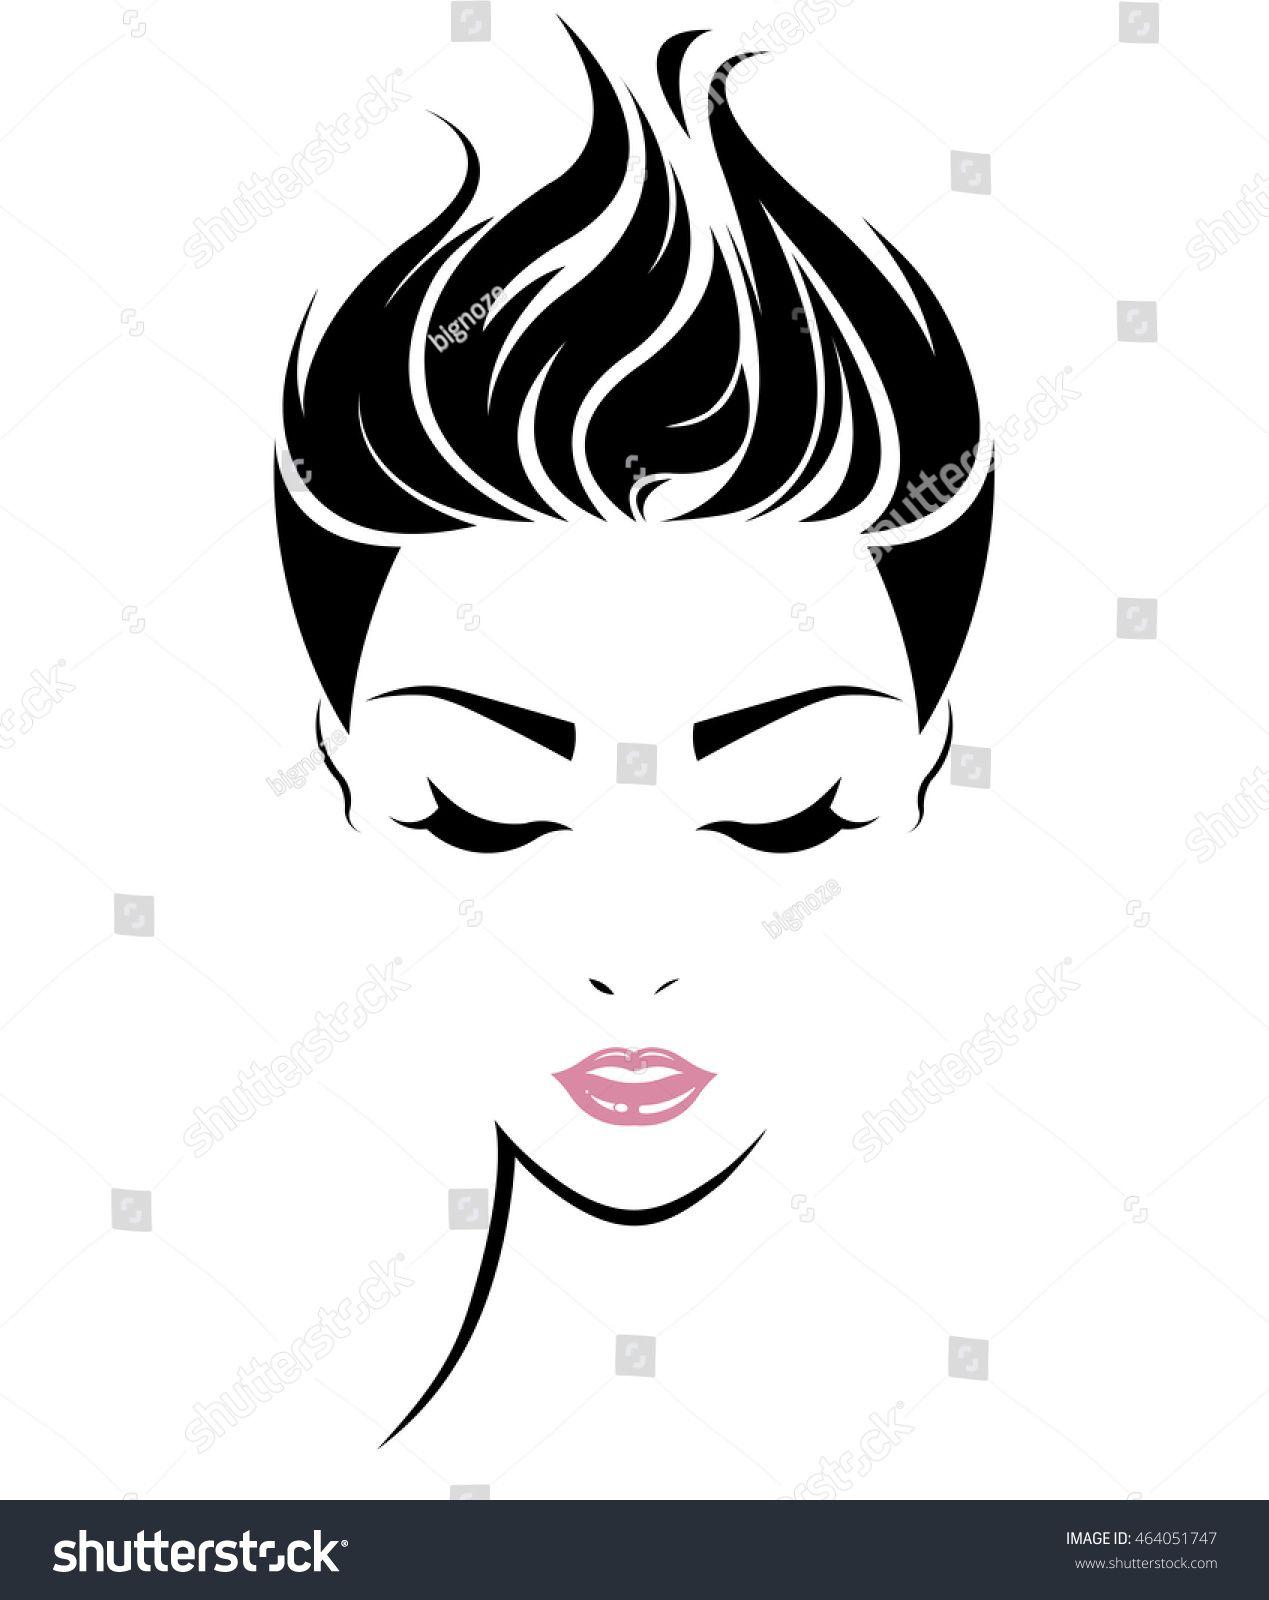 Woman Face Logo - illustration of women short hair style icon, logo women face on ...